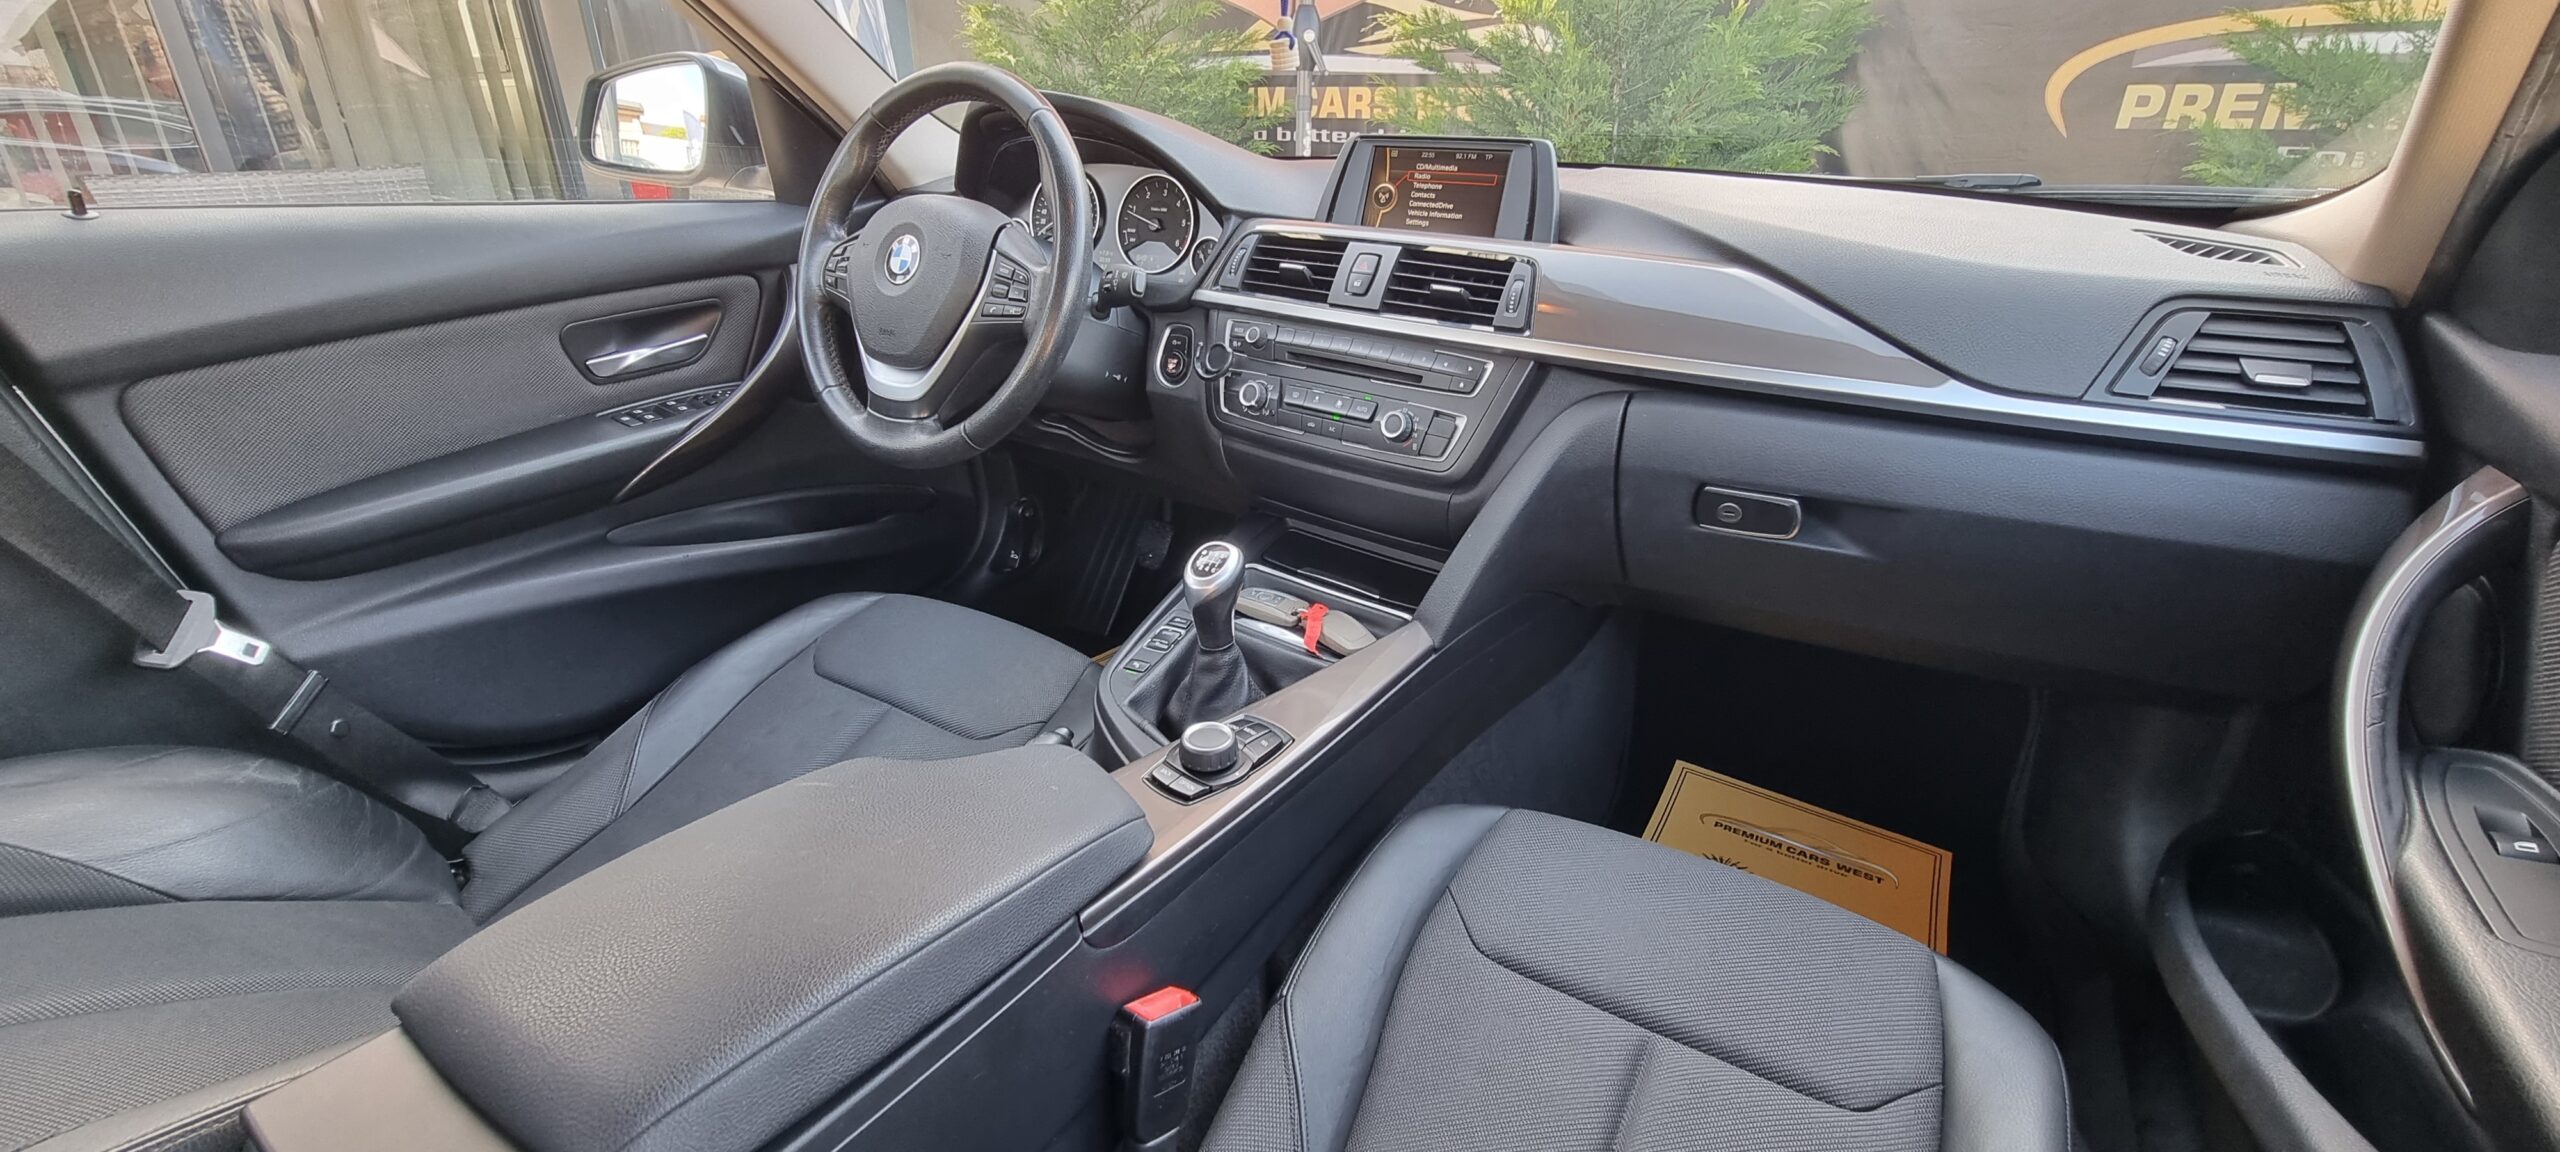 BMW F 30, 2.0 DIESEL, 184 CP, EURO 5, AN 2013